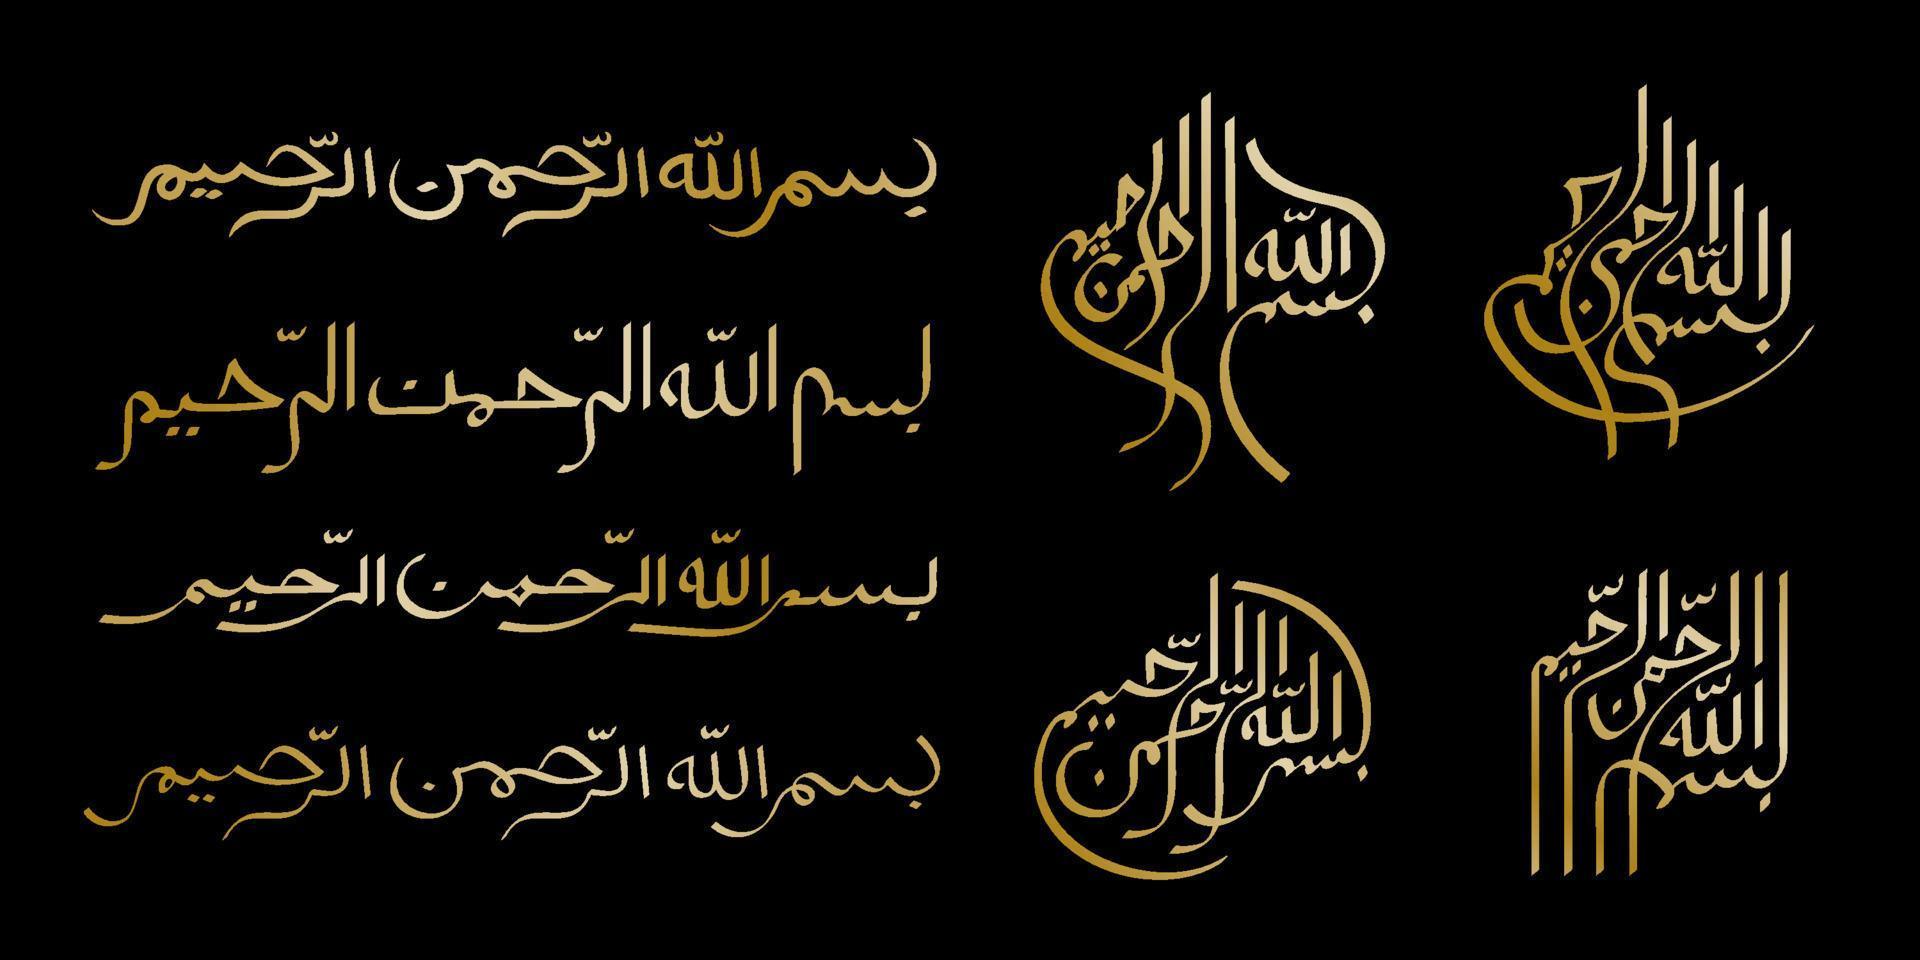 Bismillahir rahmanir rahim in Arabic calligraphy set in different style vector